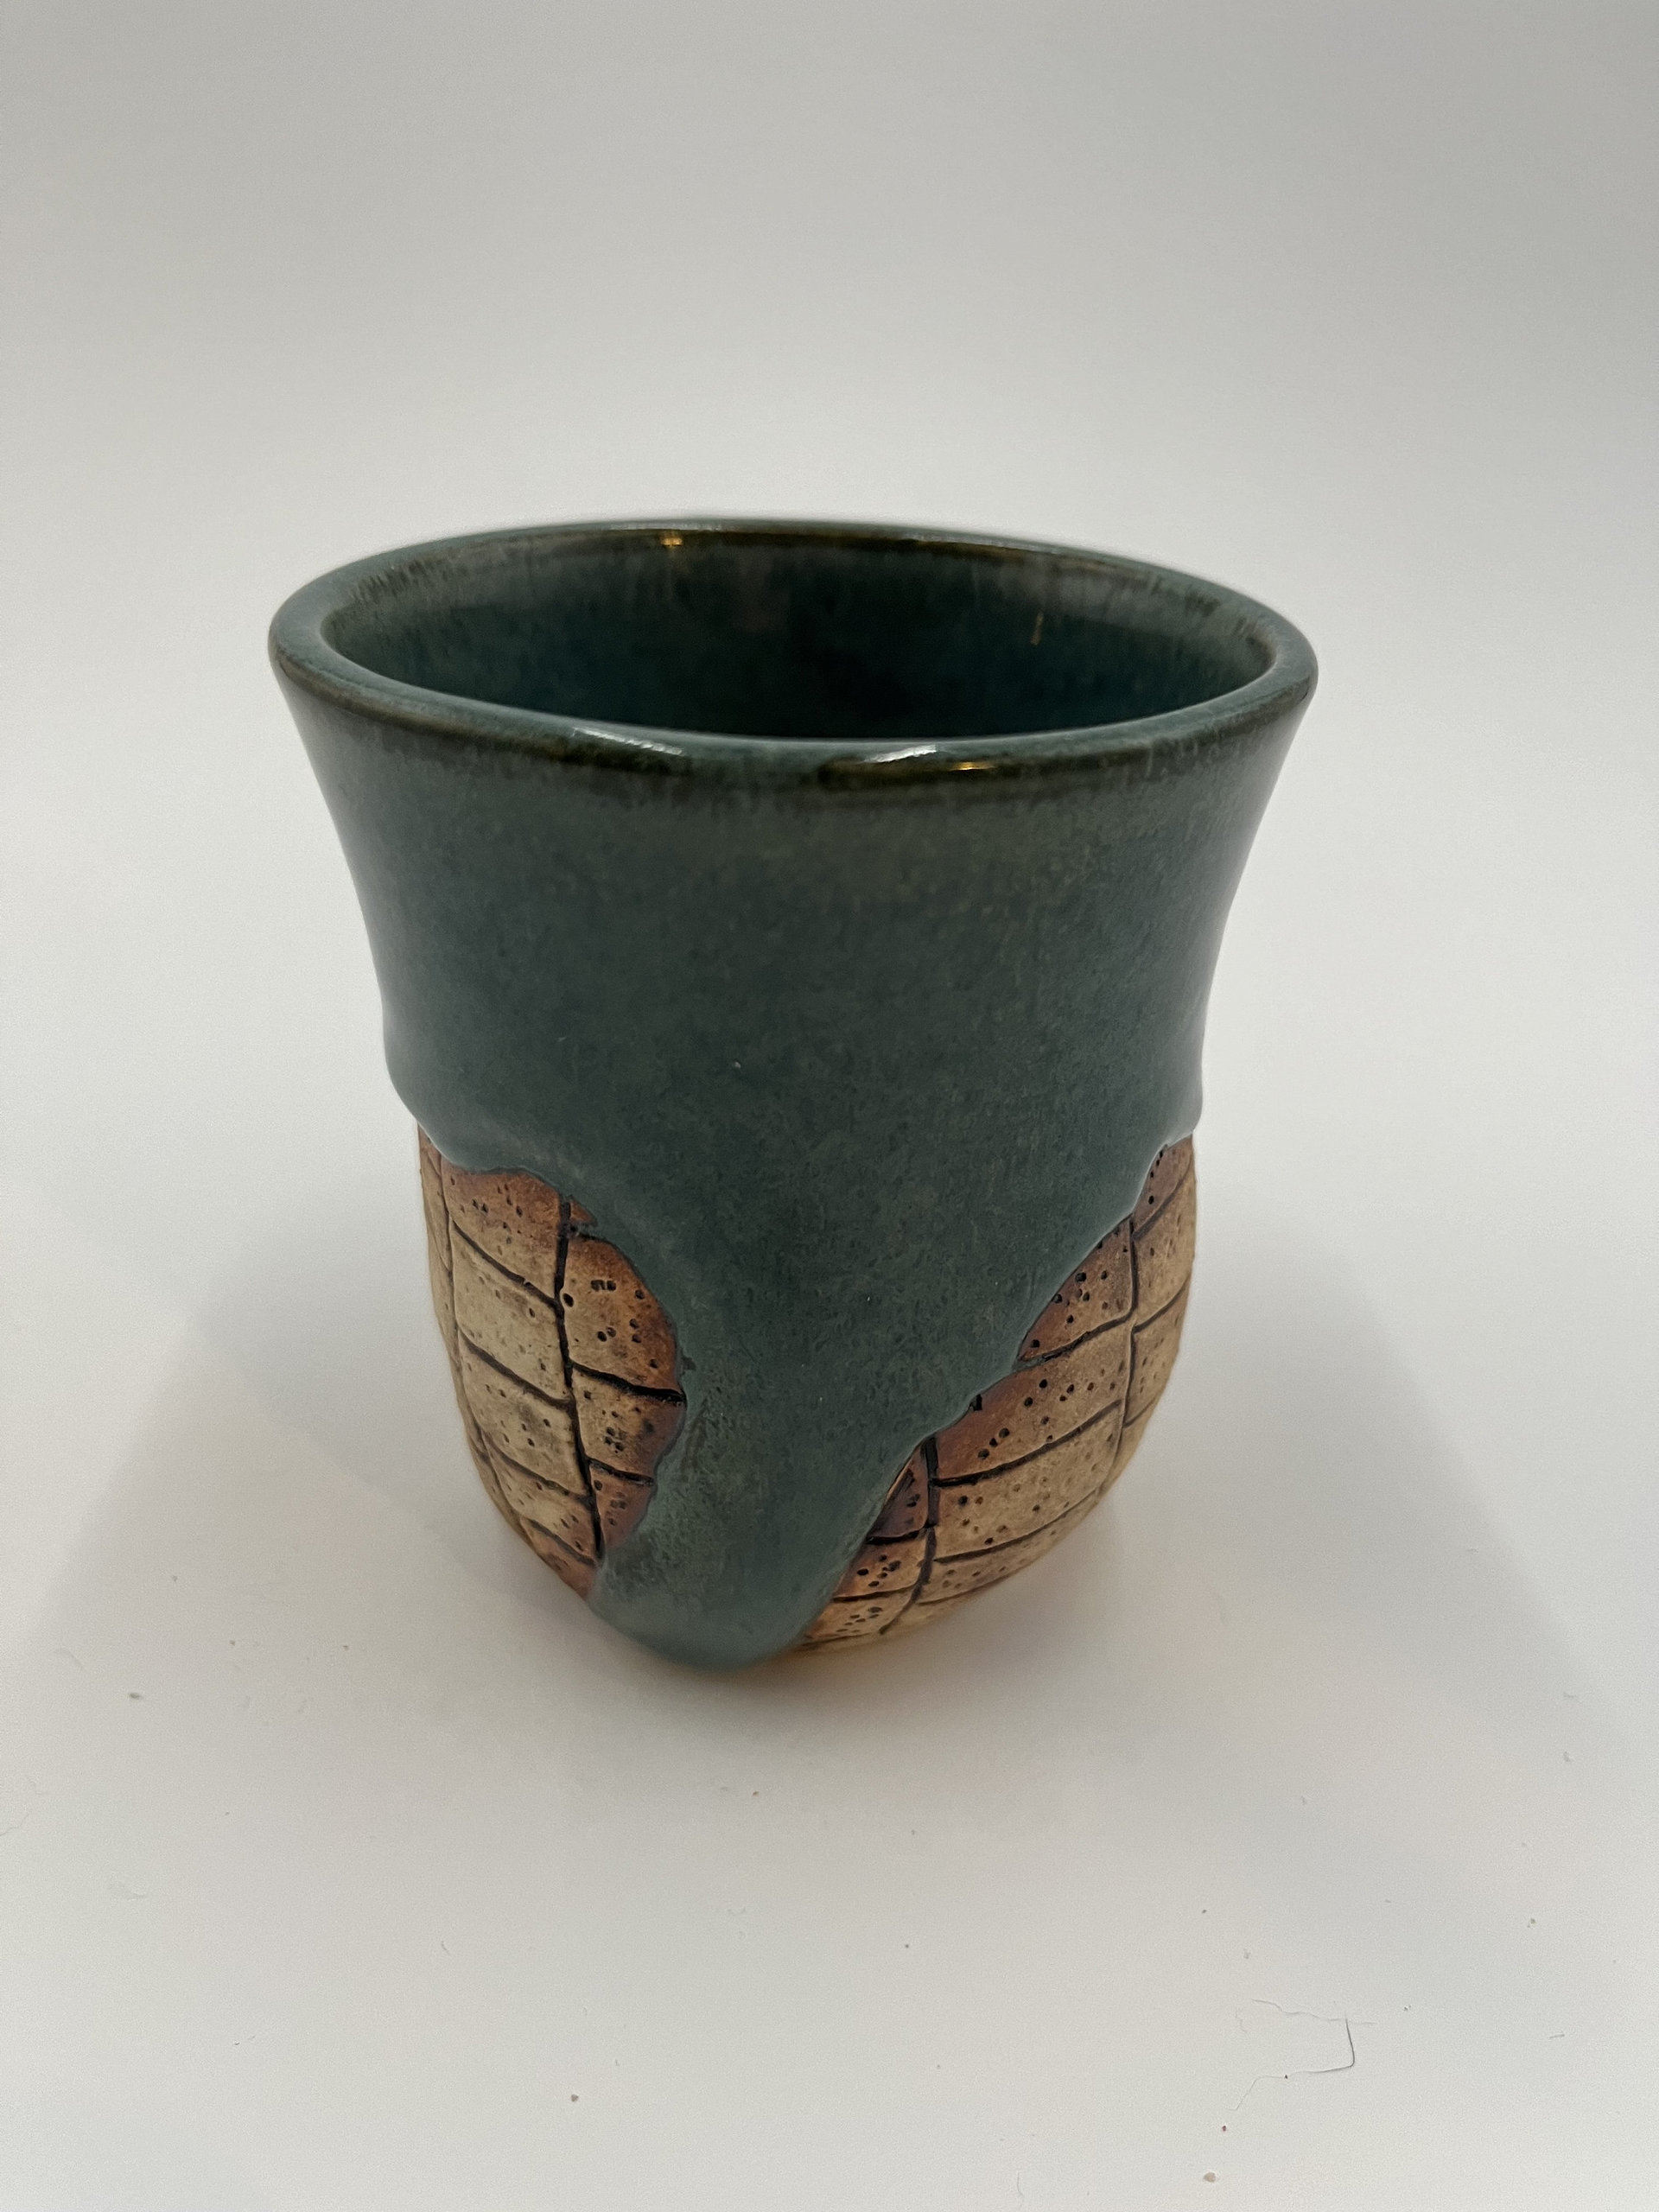 Handmade Blue and Green Mug with Carved Bricks